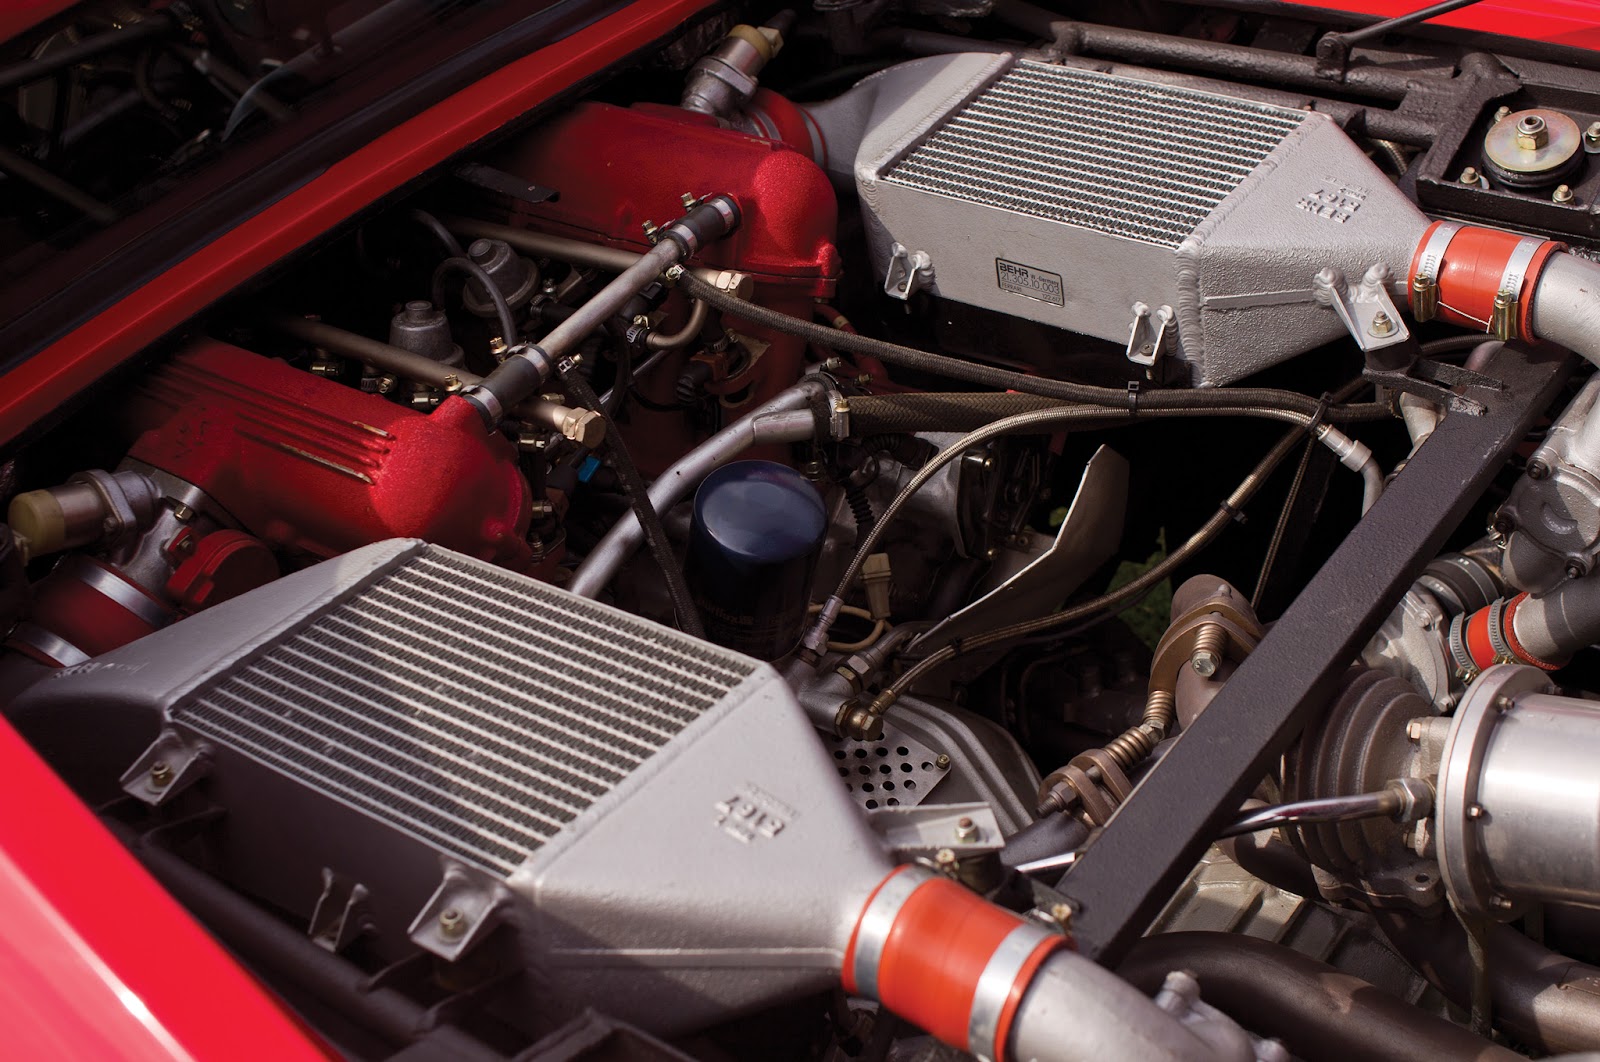 1985-Ferrari-288-GTO-RM-Auctions-engine-compartment-view.jpg